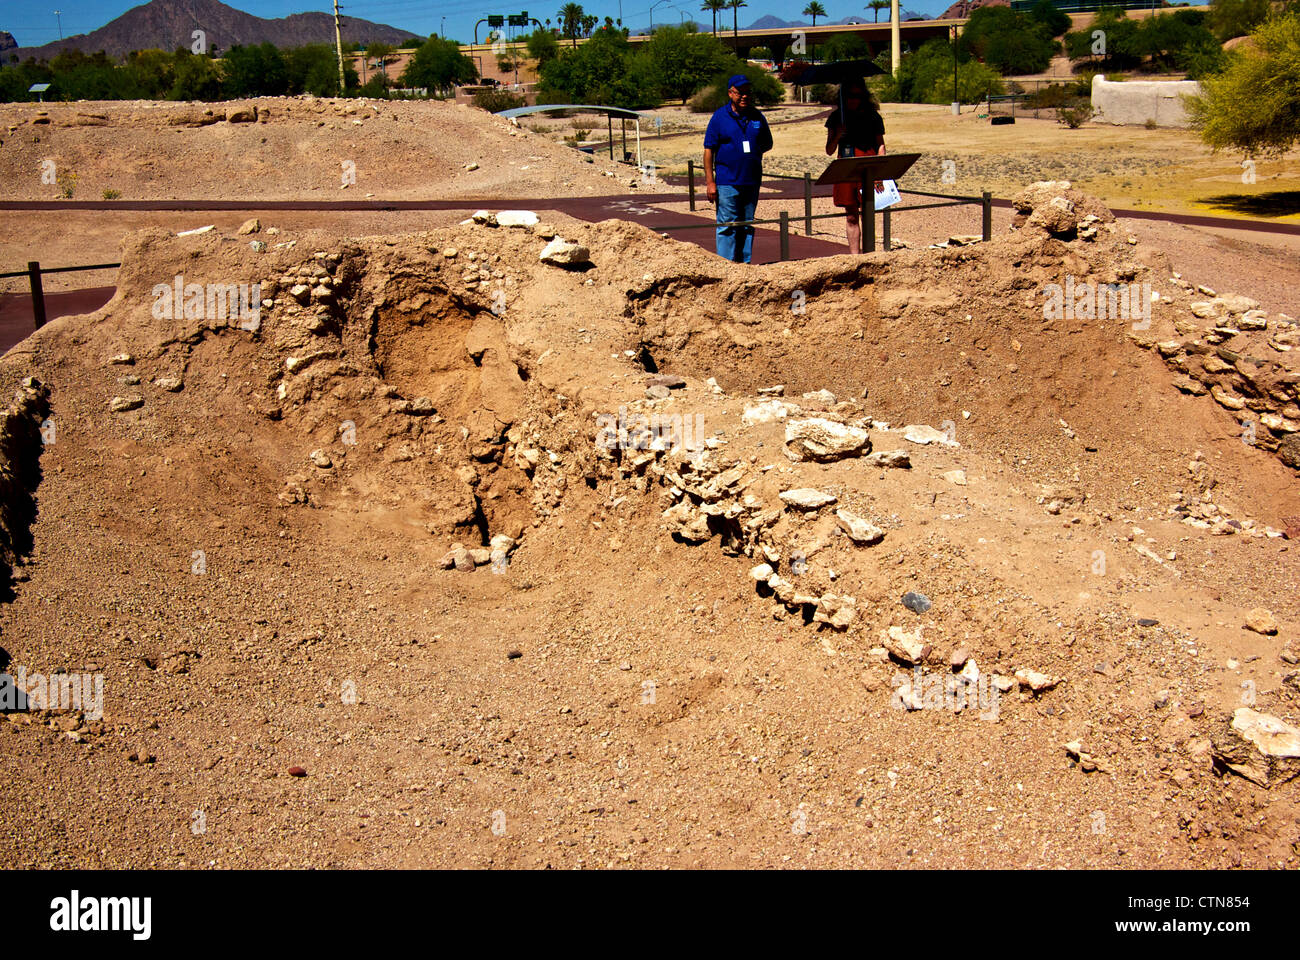 Docent showing female visitor archaeological excavation American Indian mud platform Pueblo Grande Museum outdoor exhibit Stock Photo